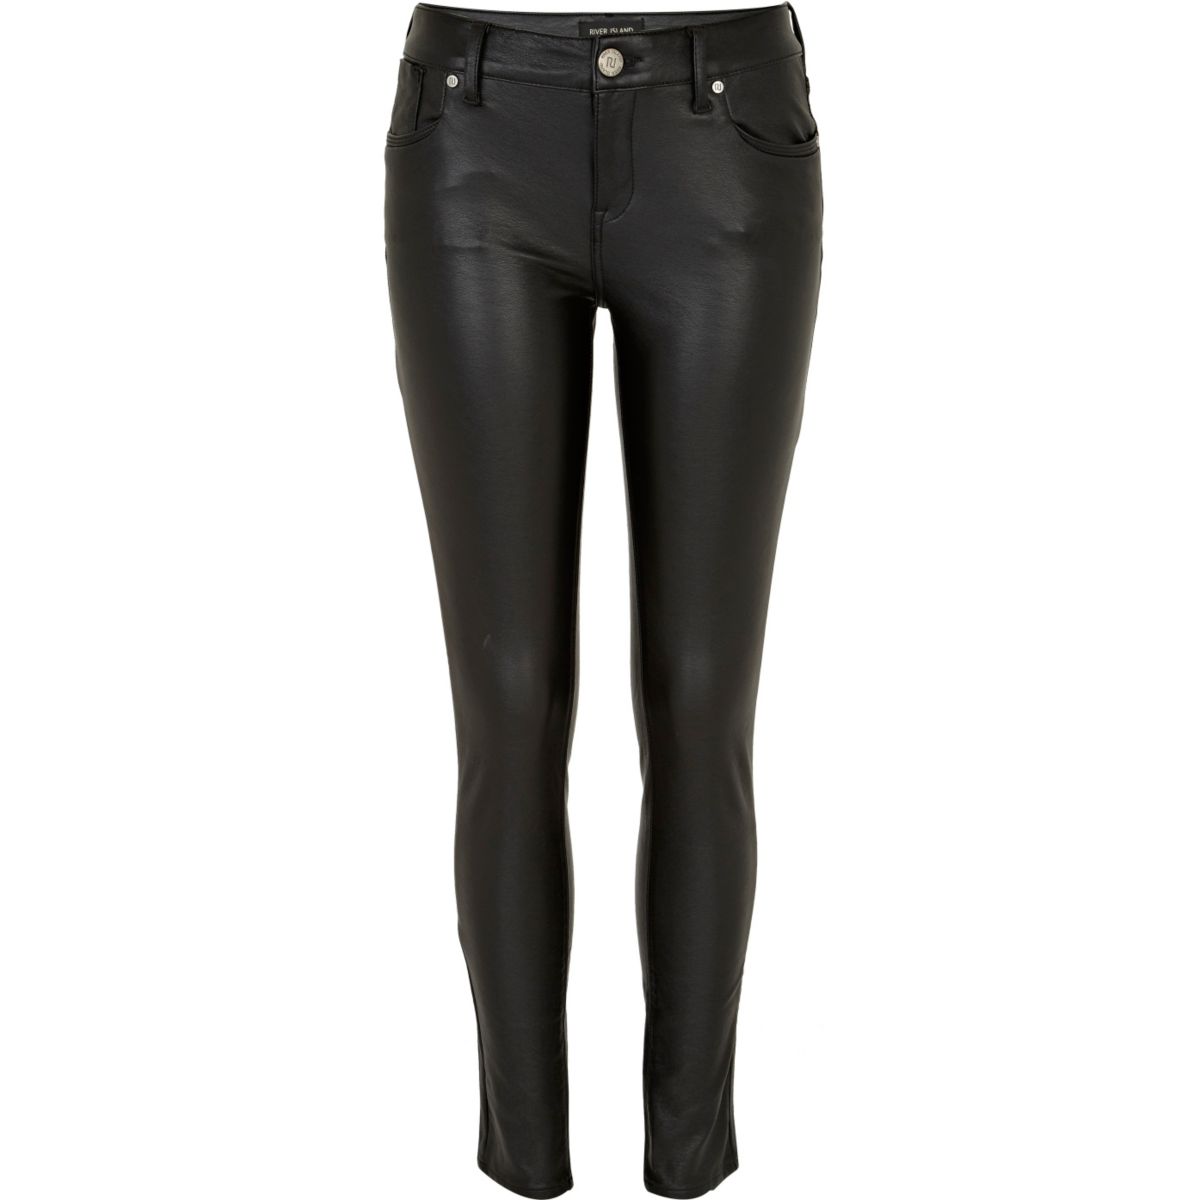 Black leather look Olive super skinny jeans - Jeans - Sale - women